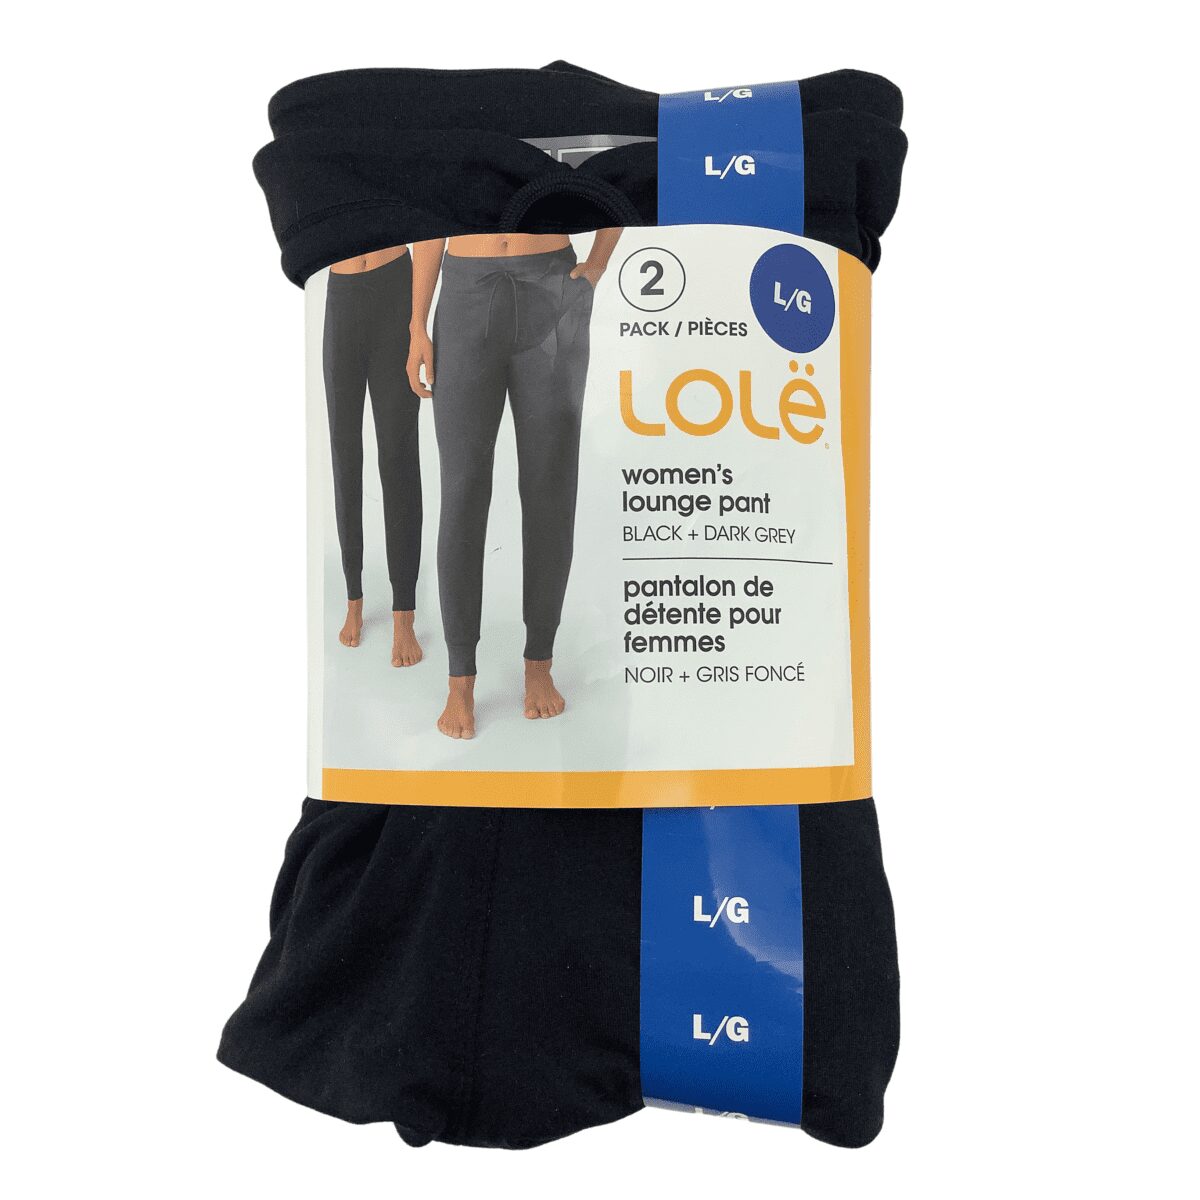 Lole - Women's Lounge Pants, 2 Pack, Grey/Black, Size: Small